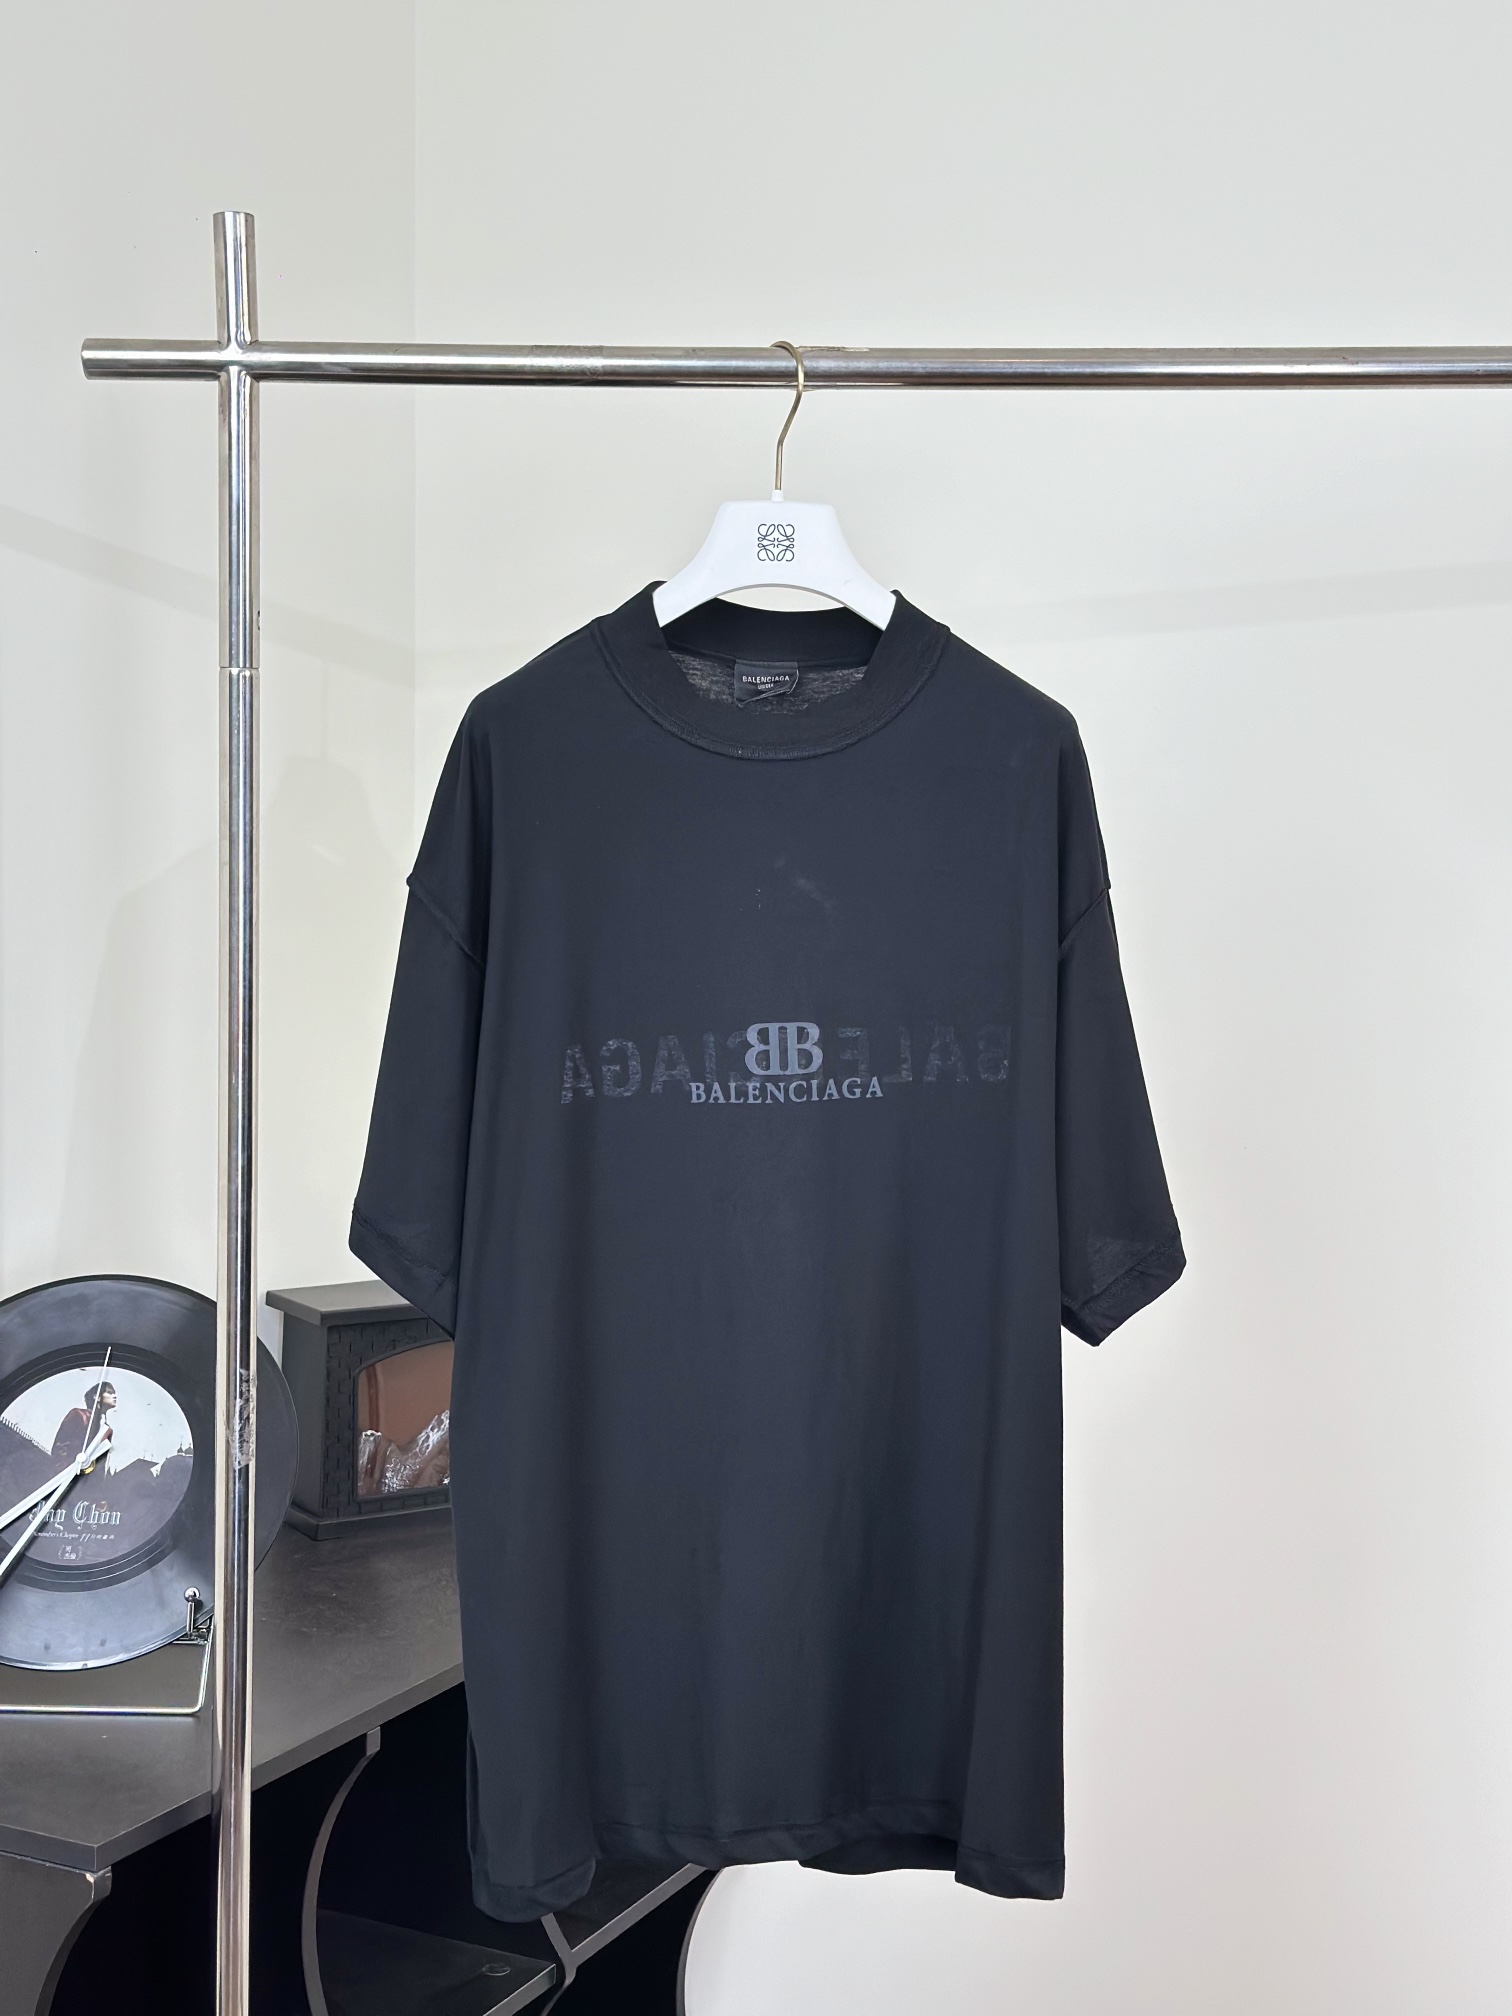 Balenciaga Clothing T-Shirt Printing Unisex Combed Cotton Short Sleeve